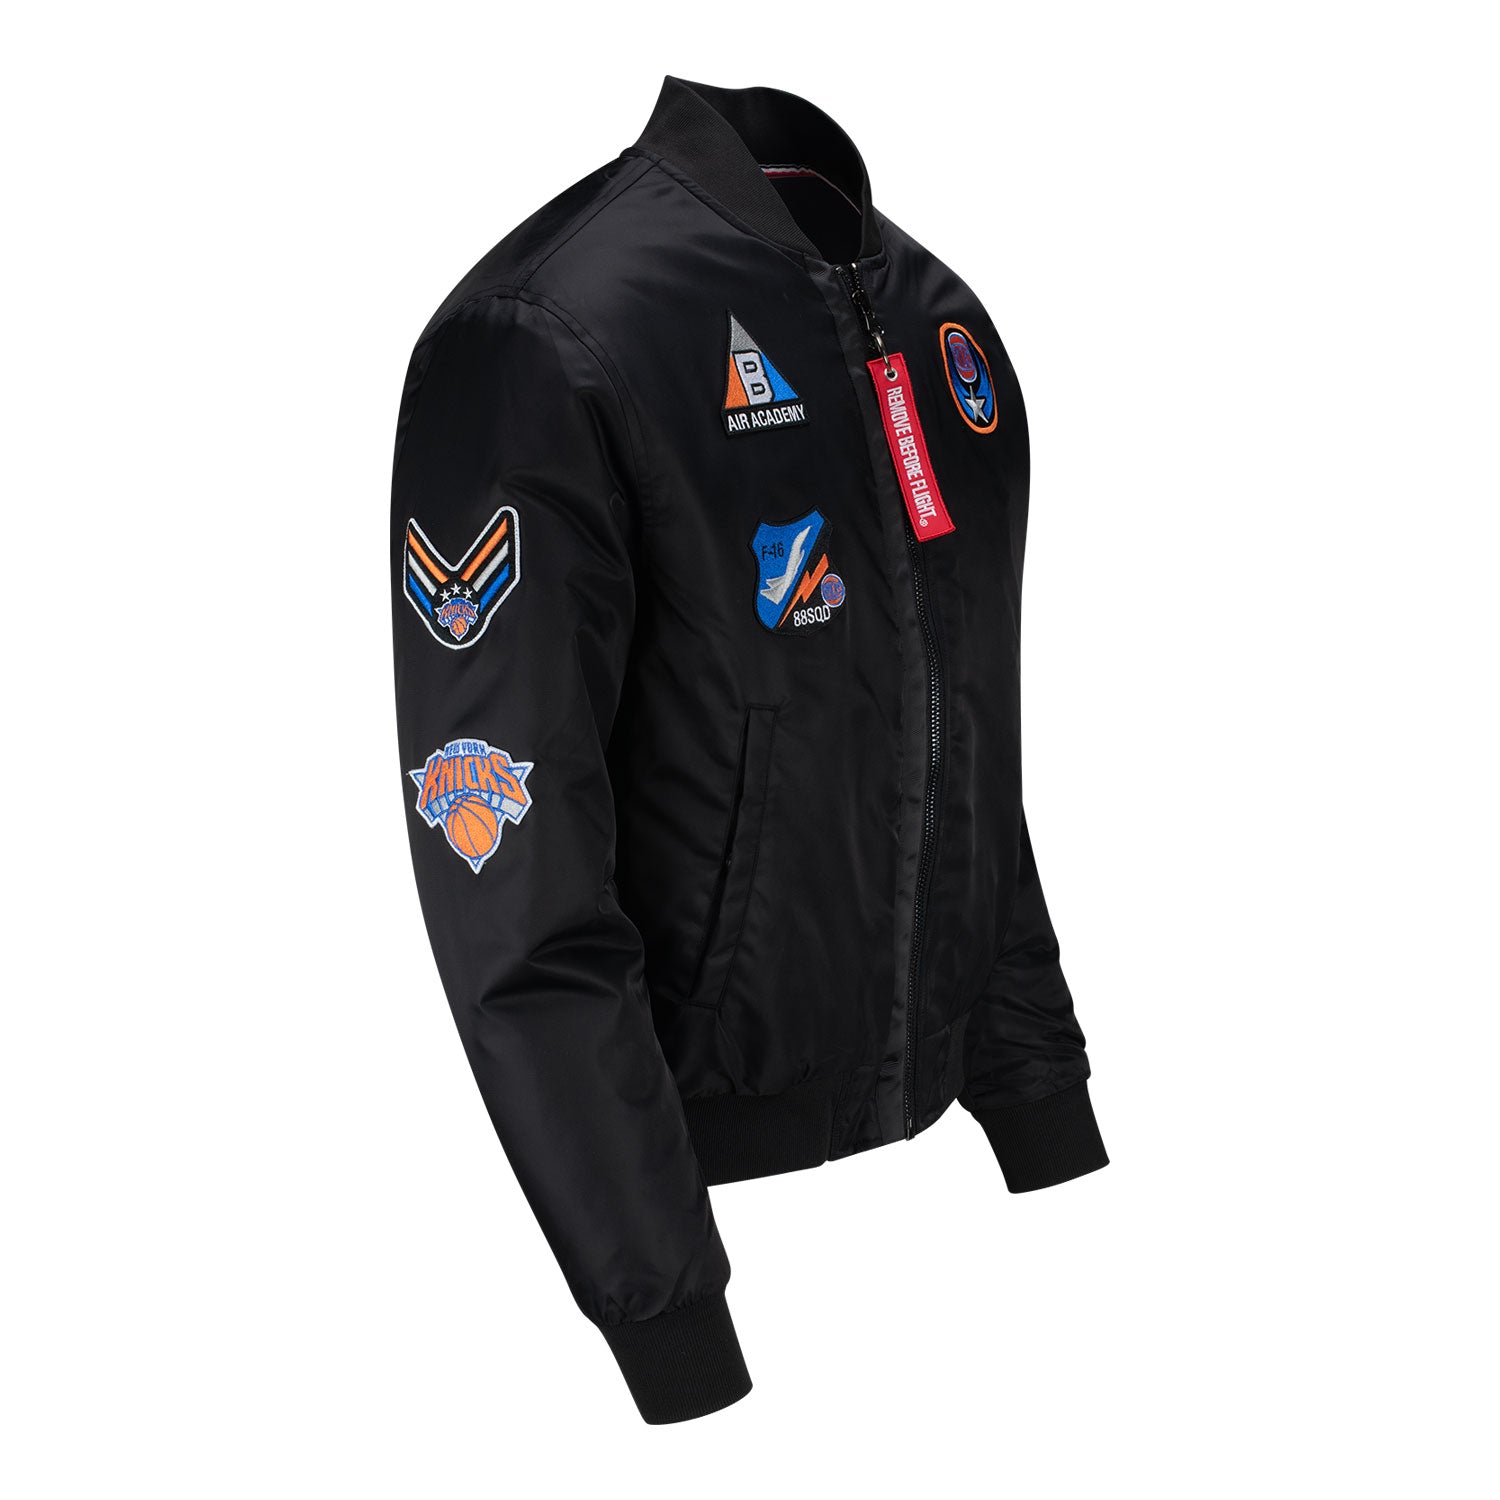 FISLL Knicks Flight Jacket In Black - Angled Right View